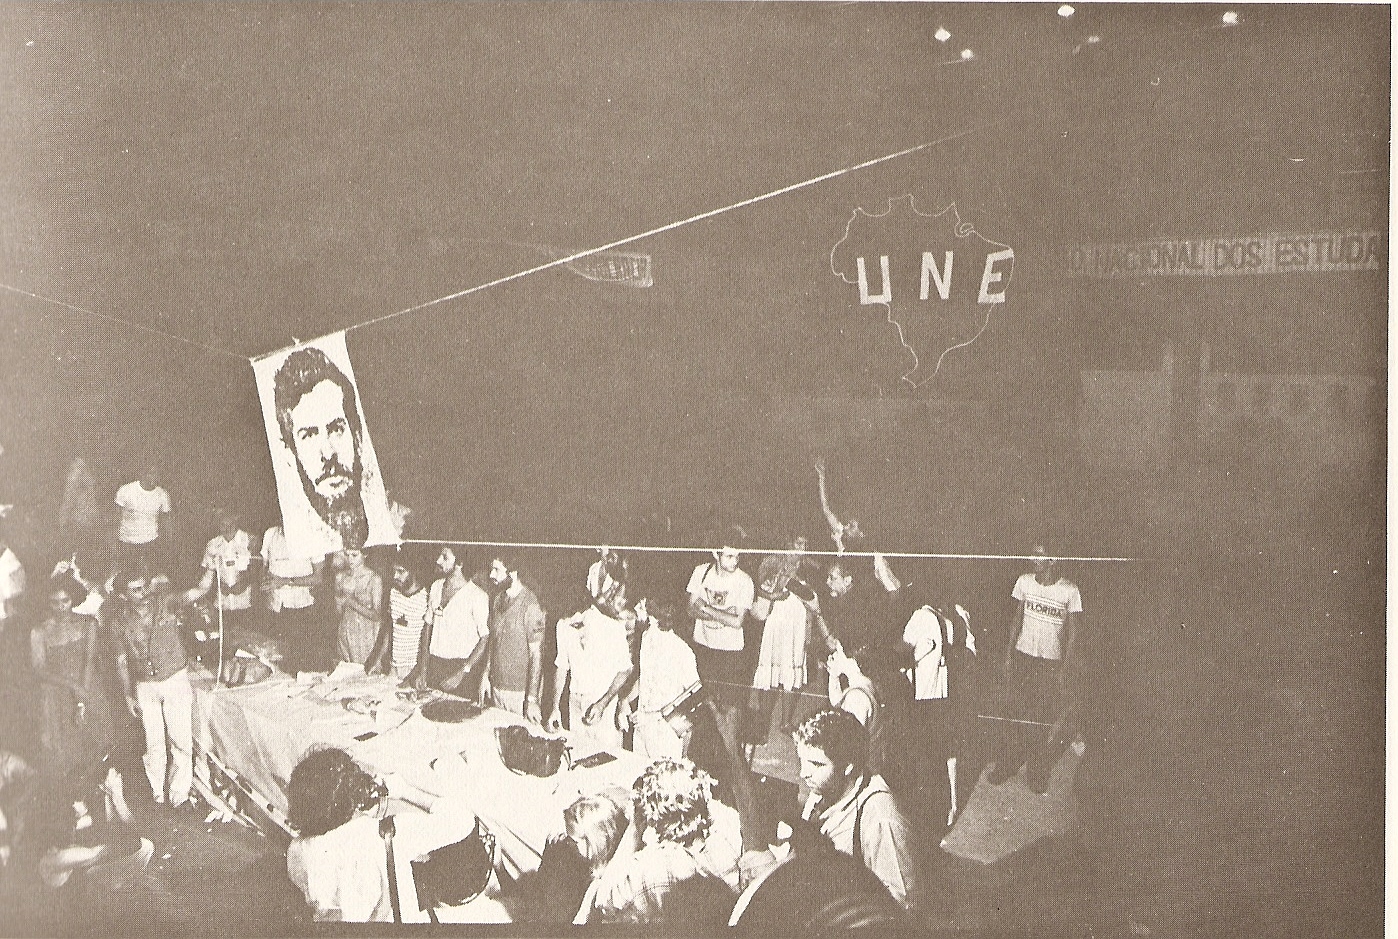 Retrato de Honestino Guimarães, último presidente da UNE, desaparecido, Presidente de Honra do XXXI Congresso